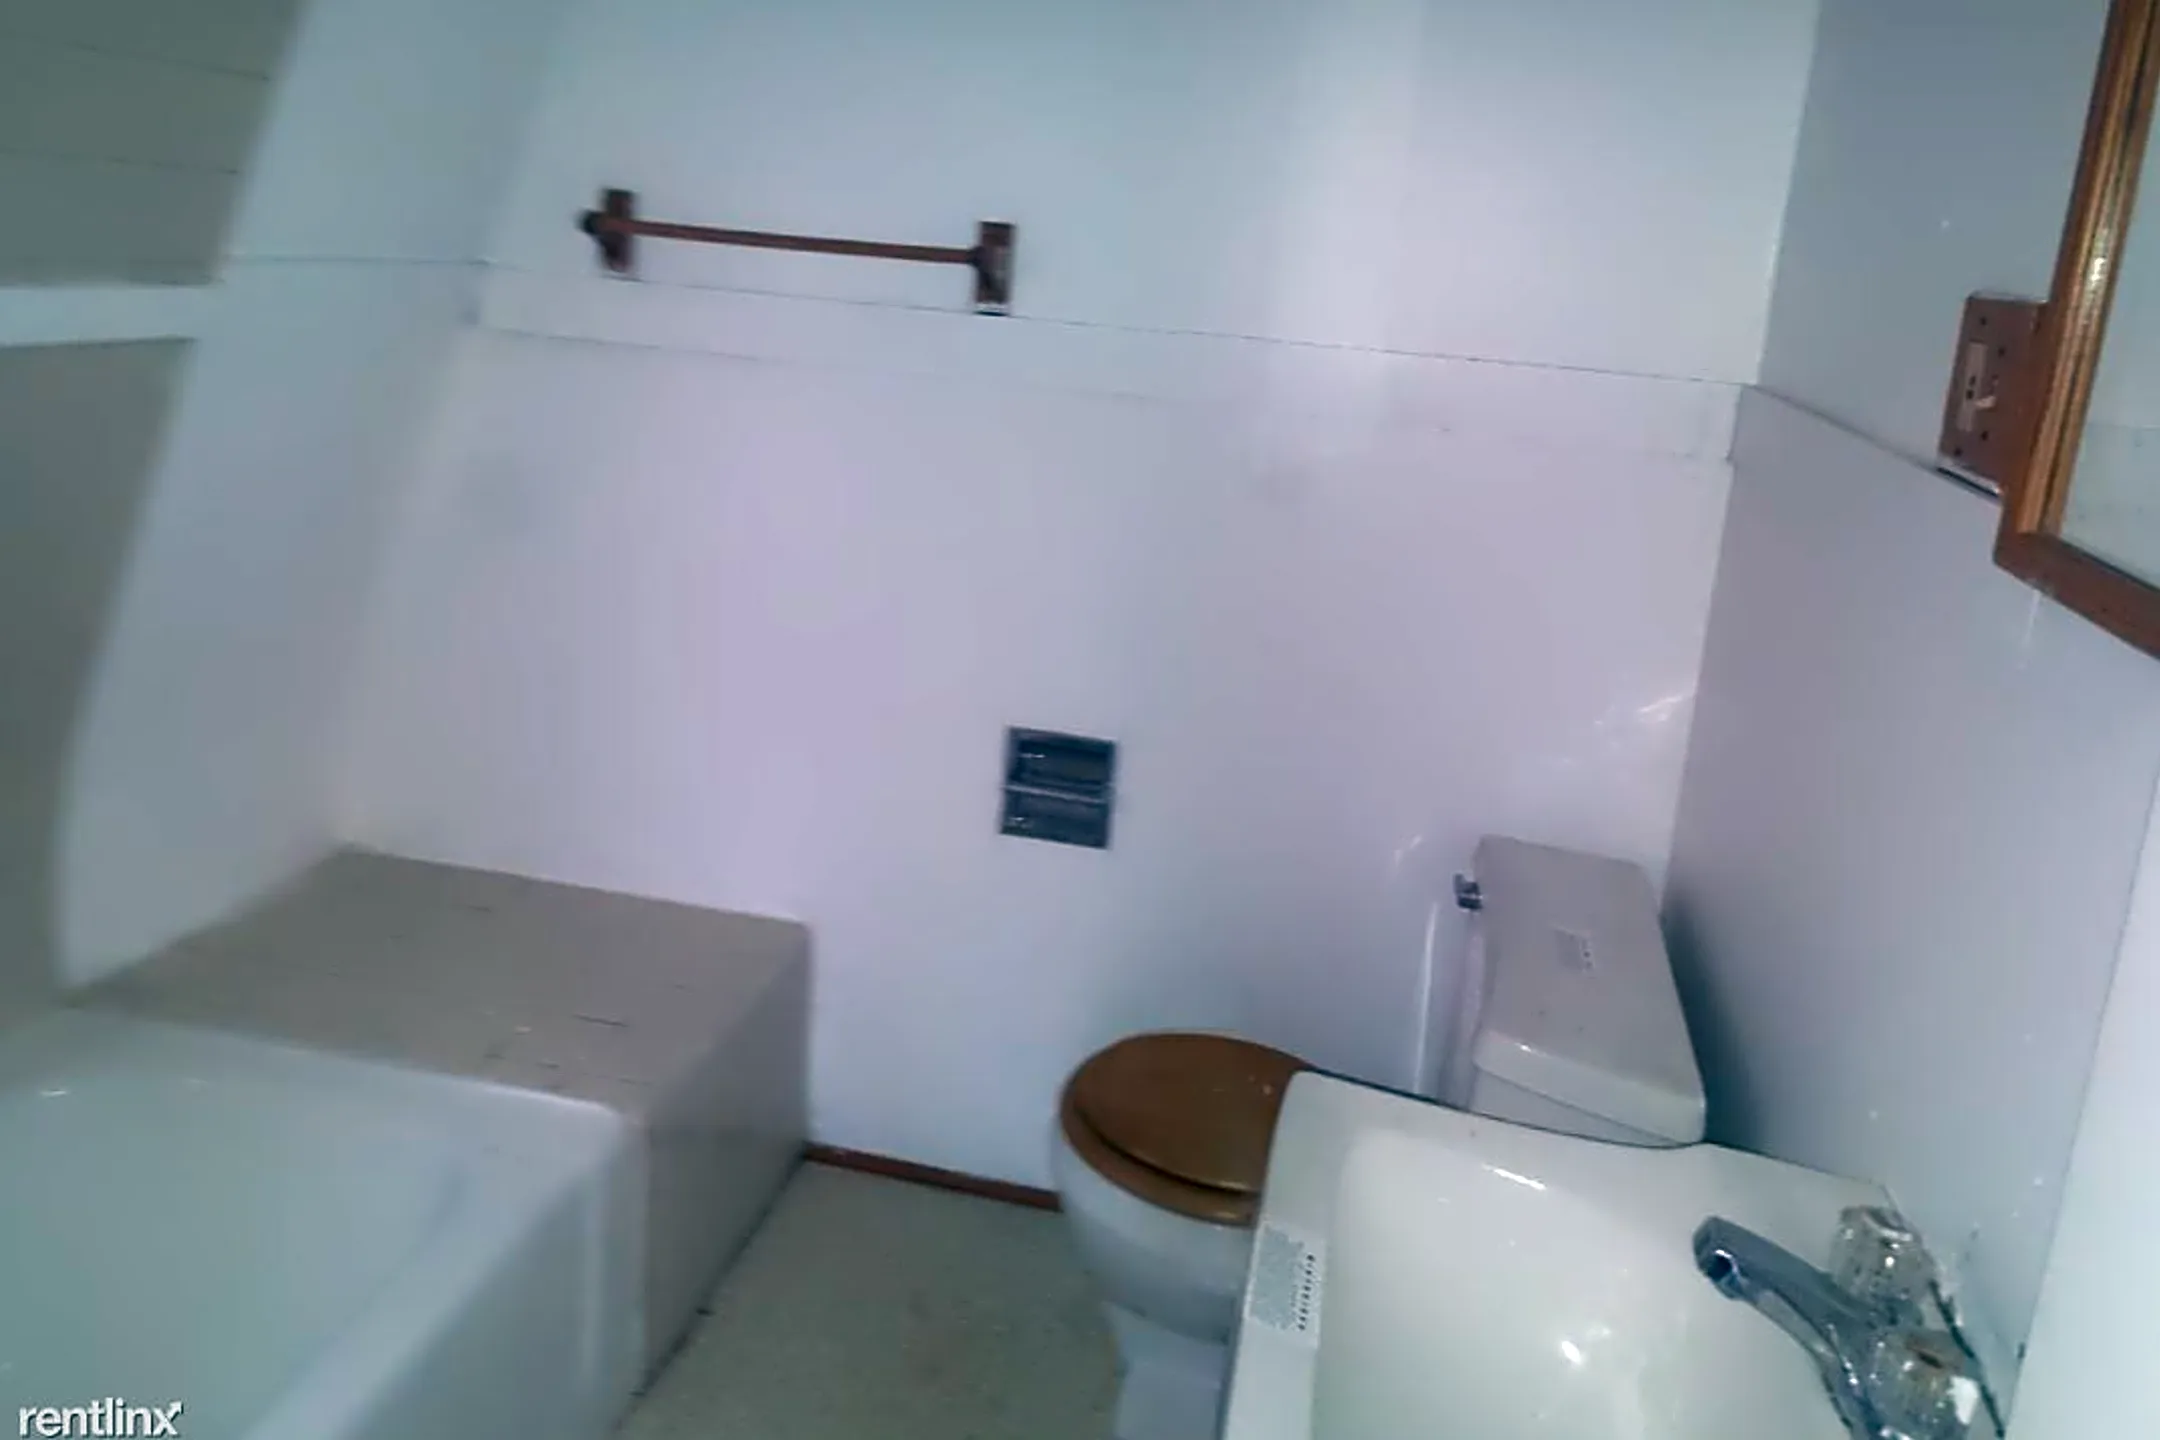 Bathroom - 963 Perry St - Flint, MI